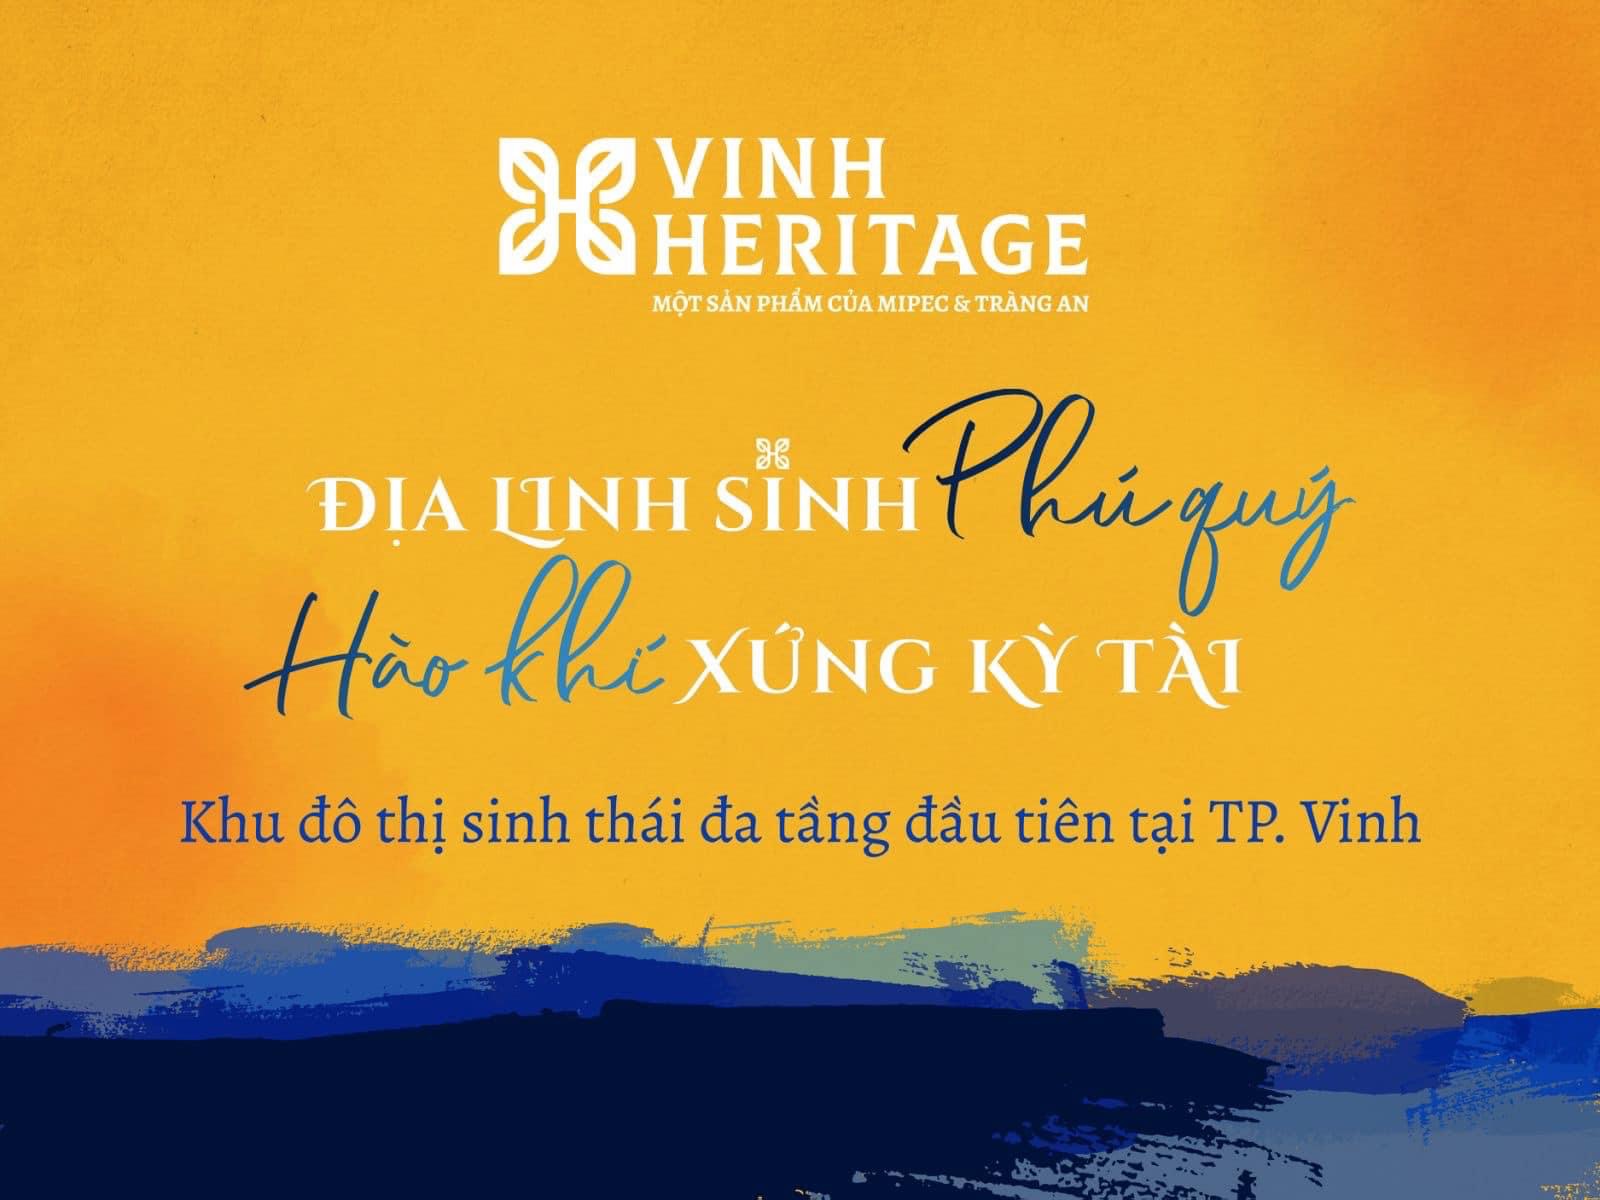 vinh heritage